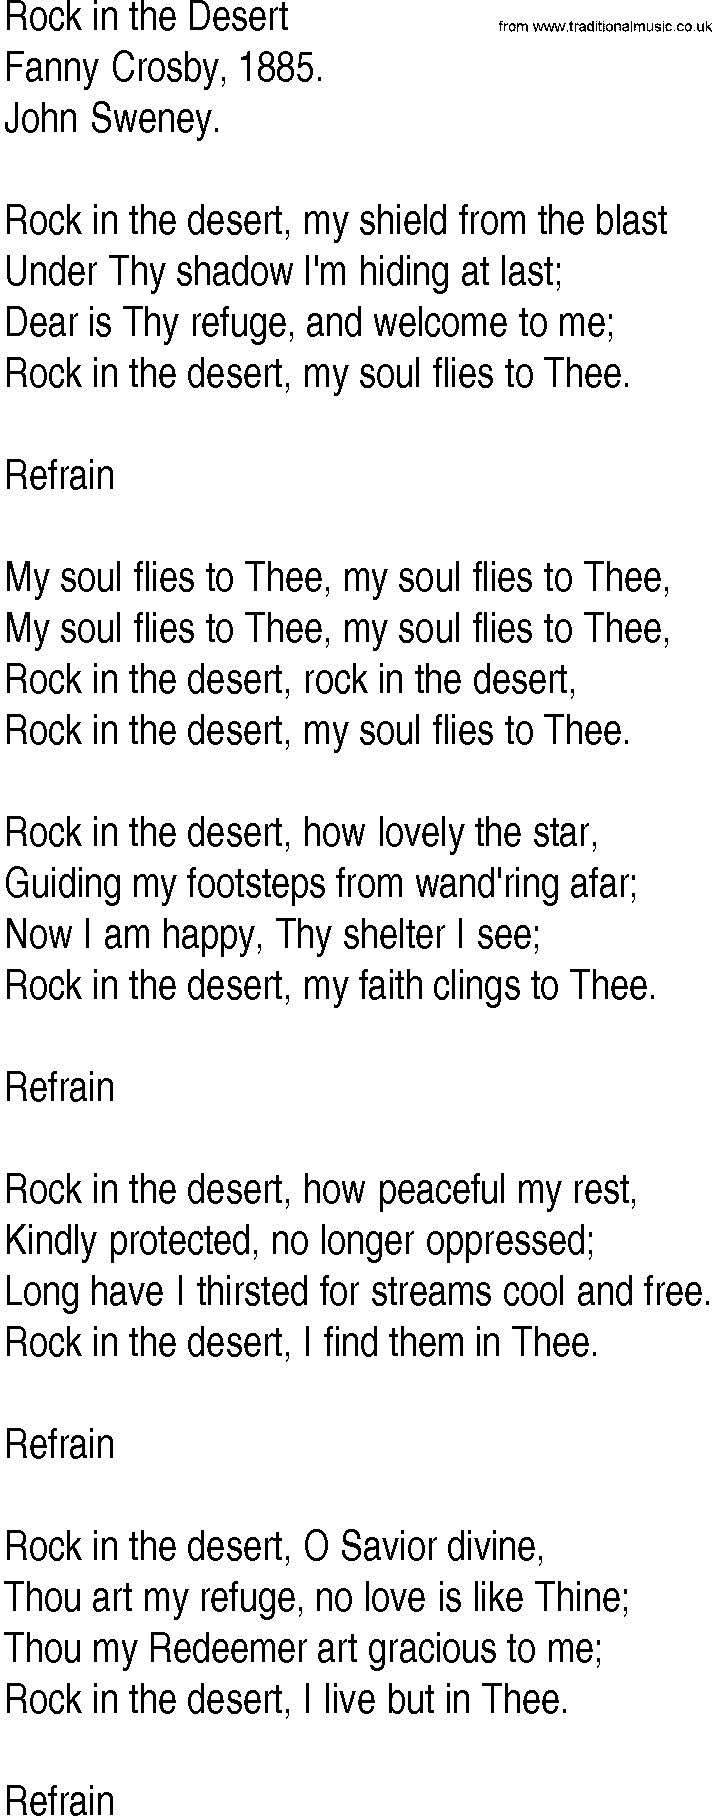 Hymn and Gospel Song: Rock in the Desert by Fanny Crosby lyrics